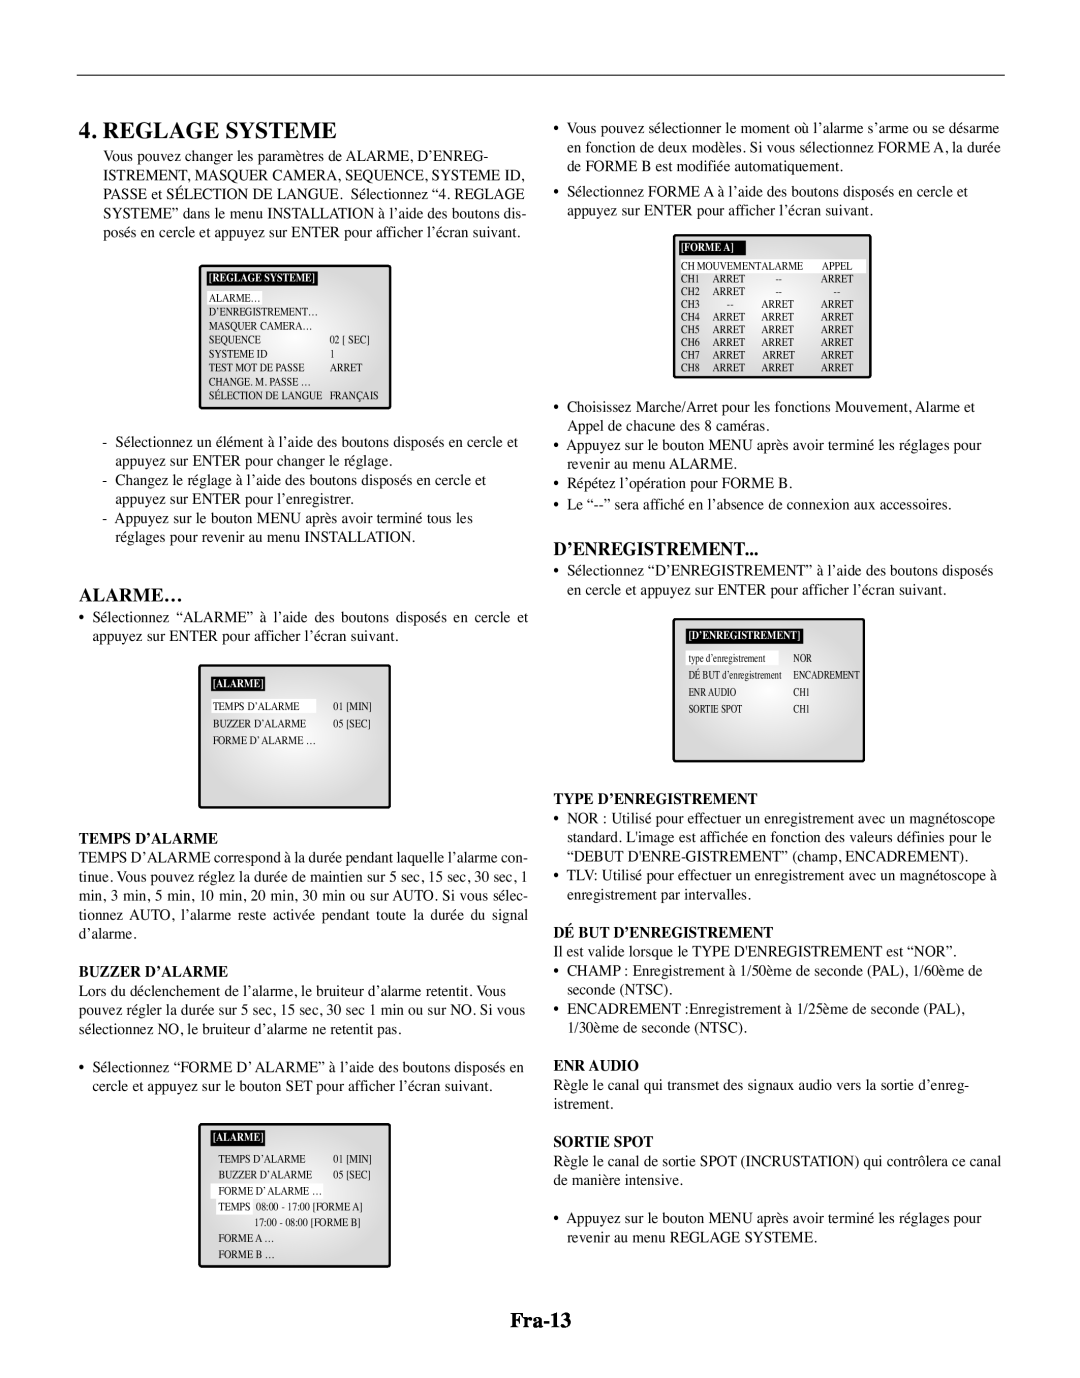 Samsung SMO-210TRP manual Reglage Systeme, Fra-13, Alarme…, D’Enregistrement, Temps D’Alarme, Buzzer D’Alarme, Enr Audio 